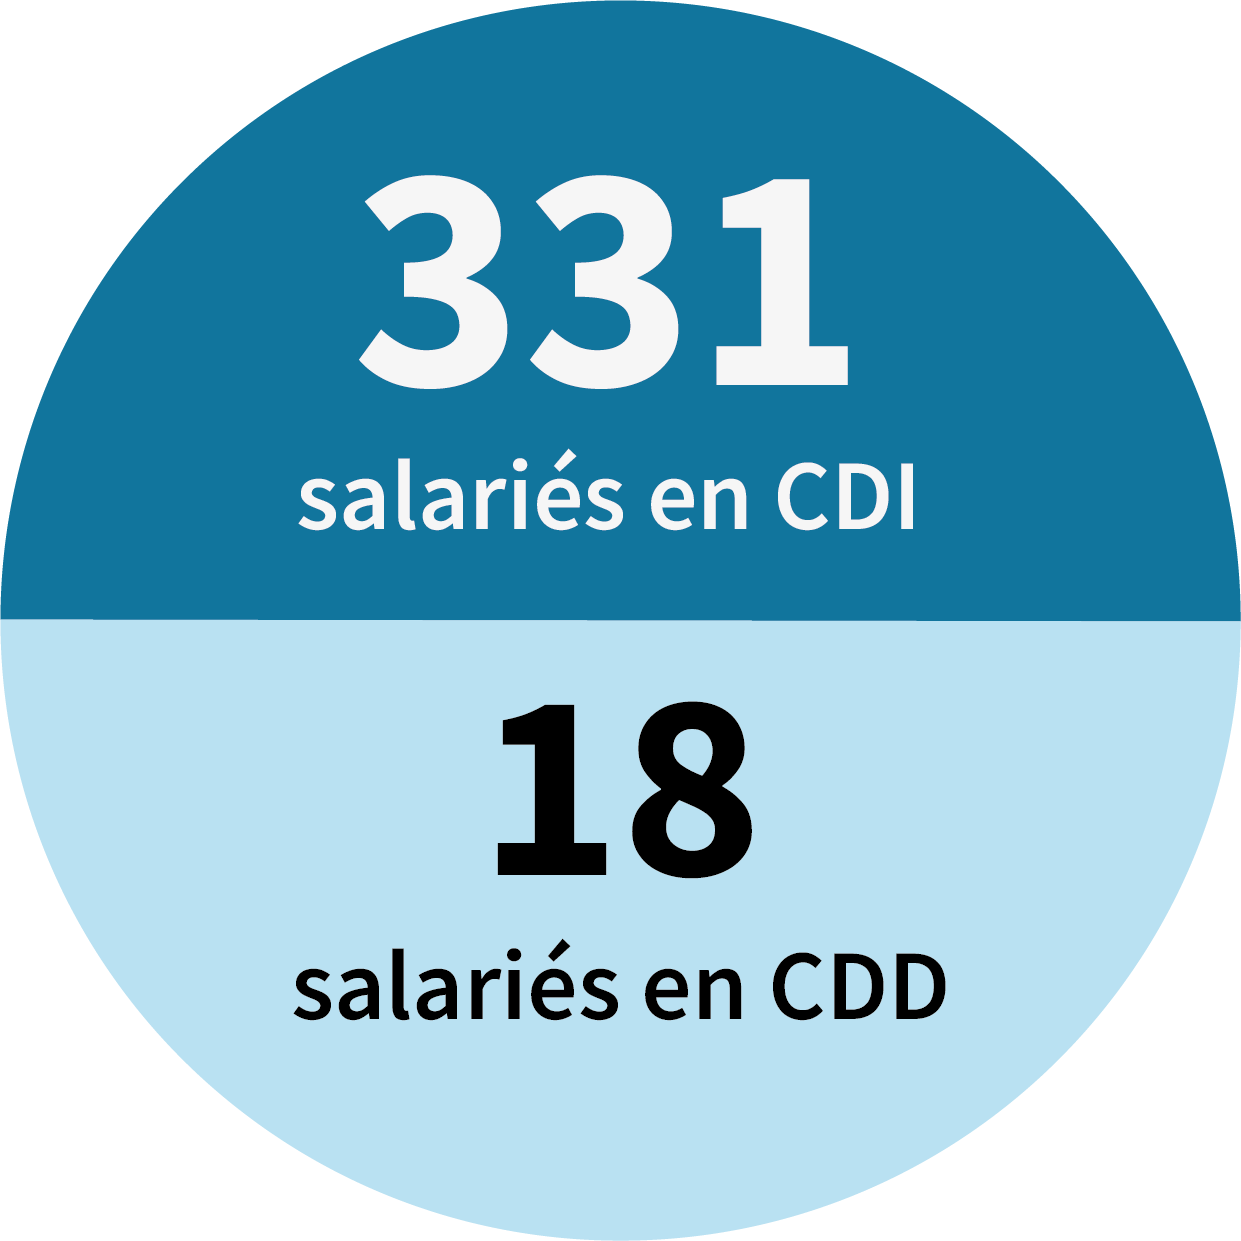 331 salariés en CDI et 18 salariés en CDD